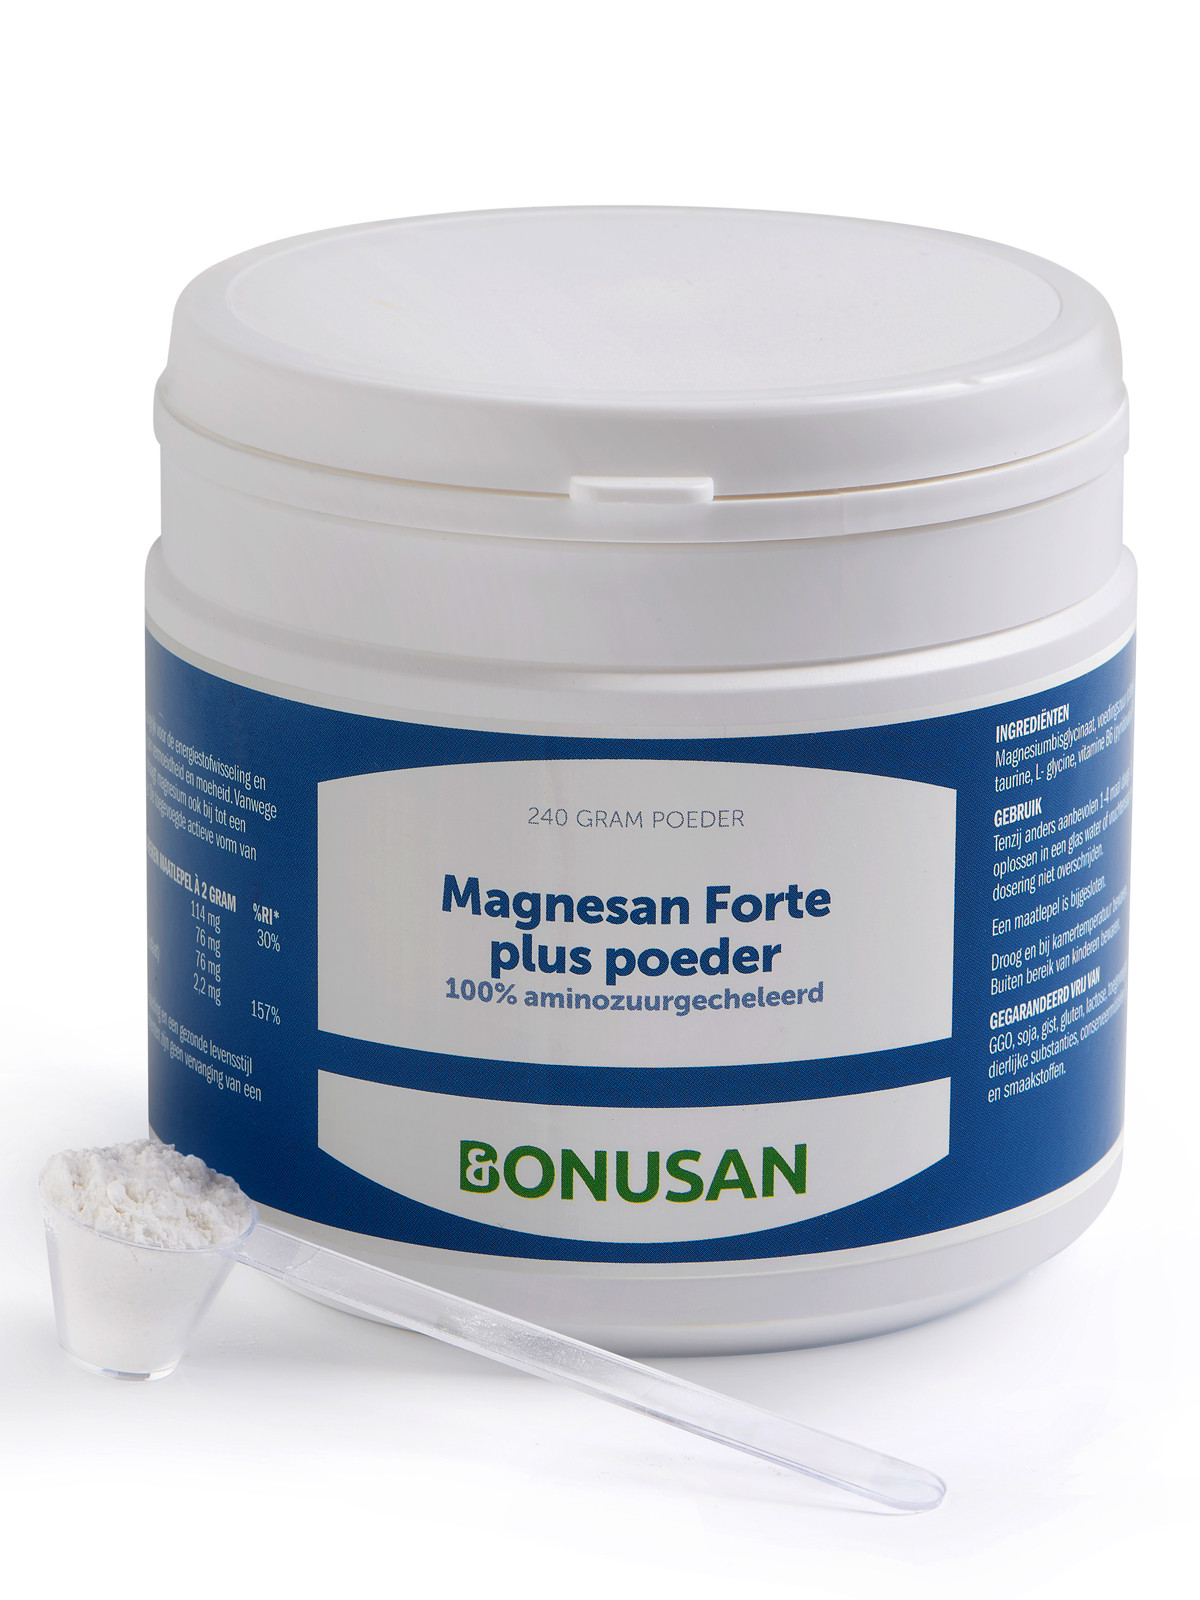 Bonusan - Magnesan Forte plus poeder - 240 gram